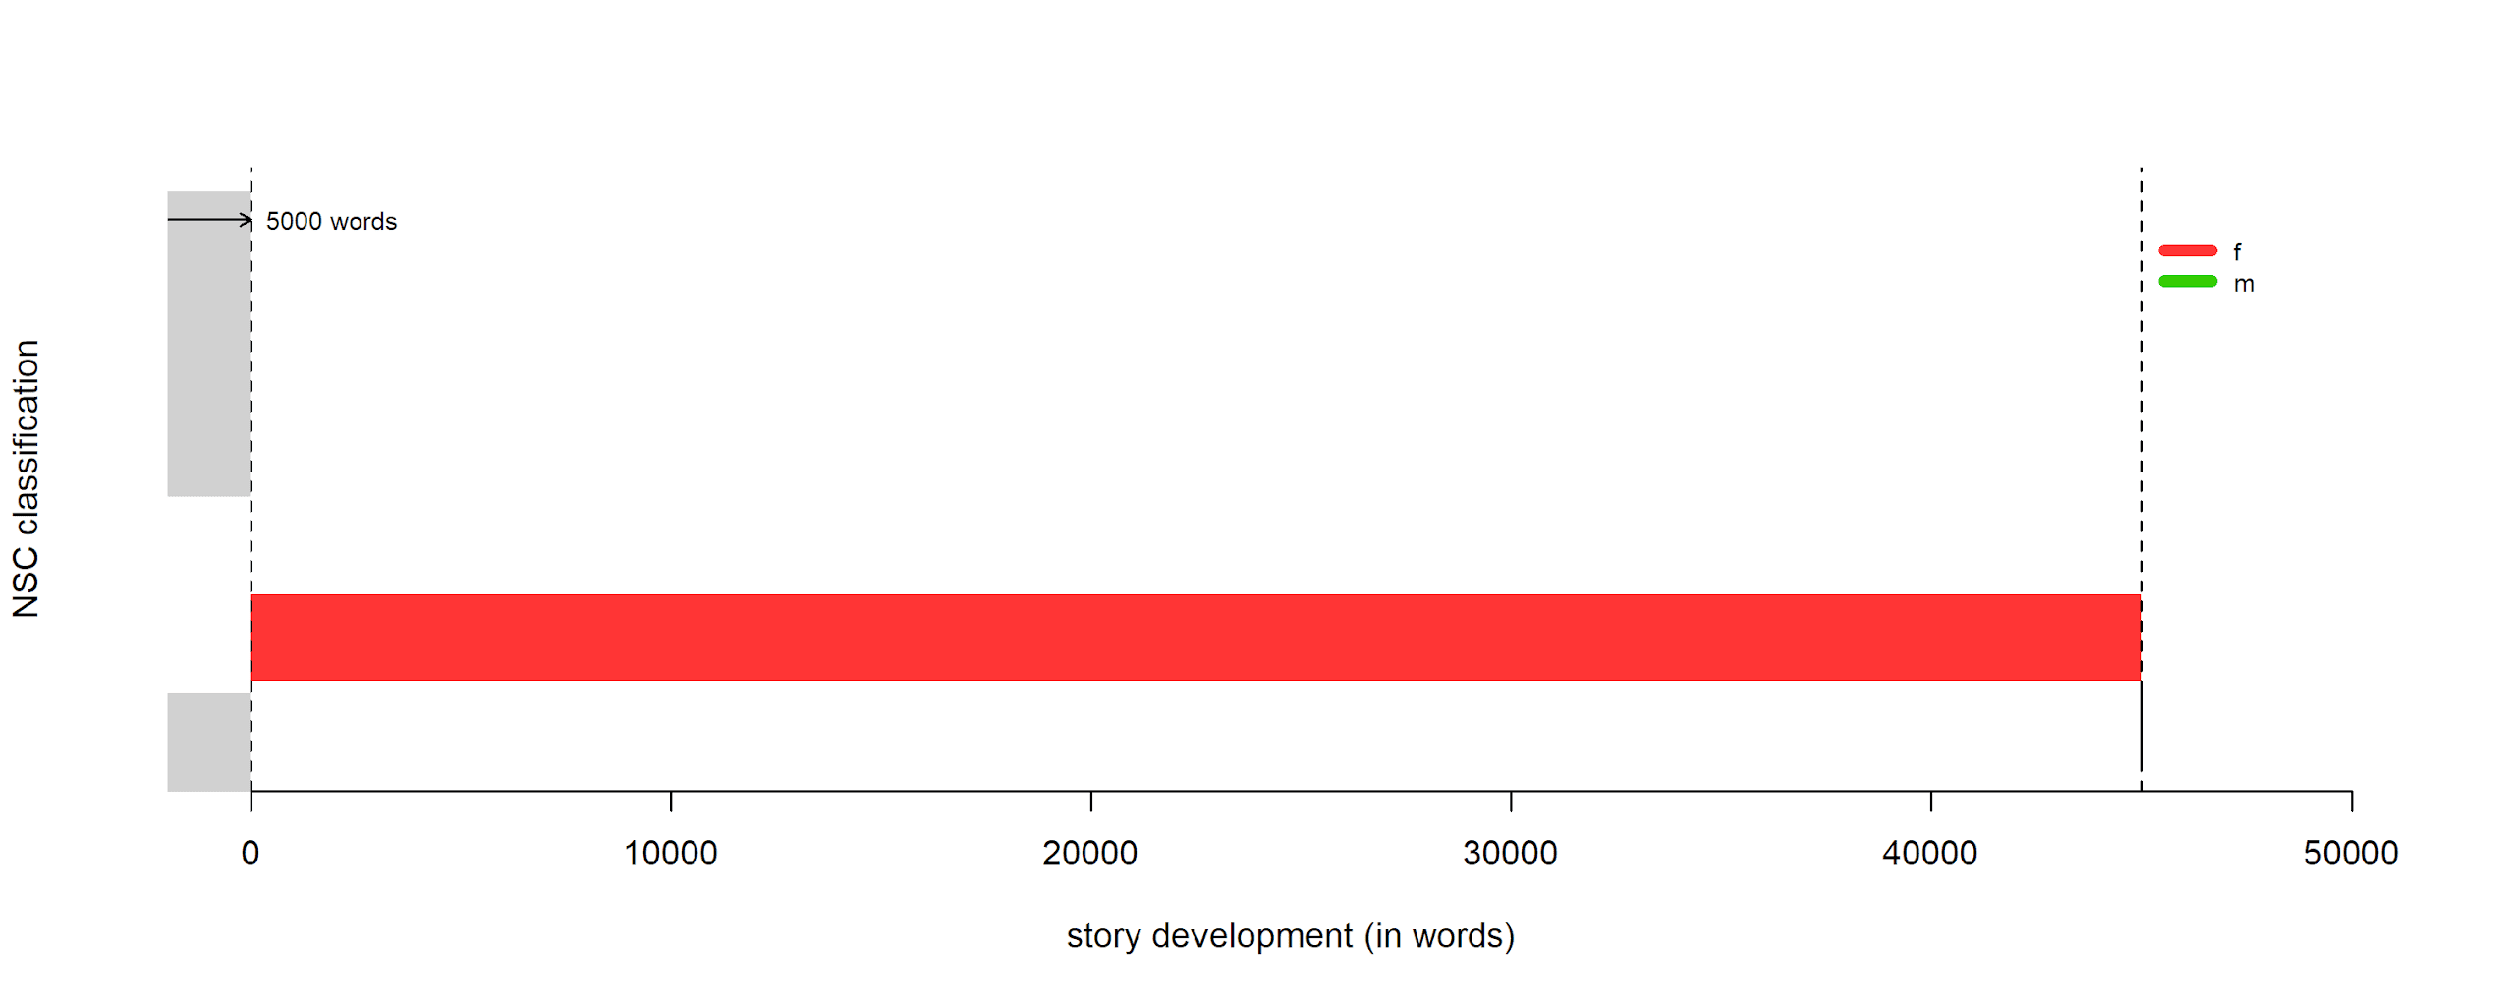 Image of a bar graph